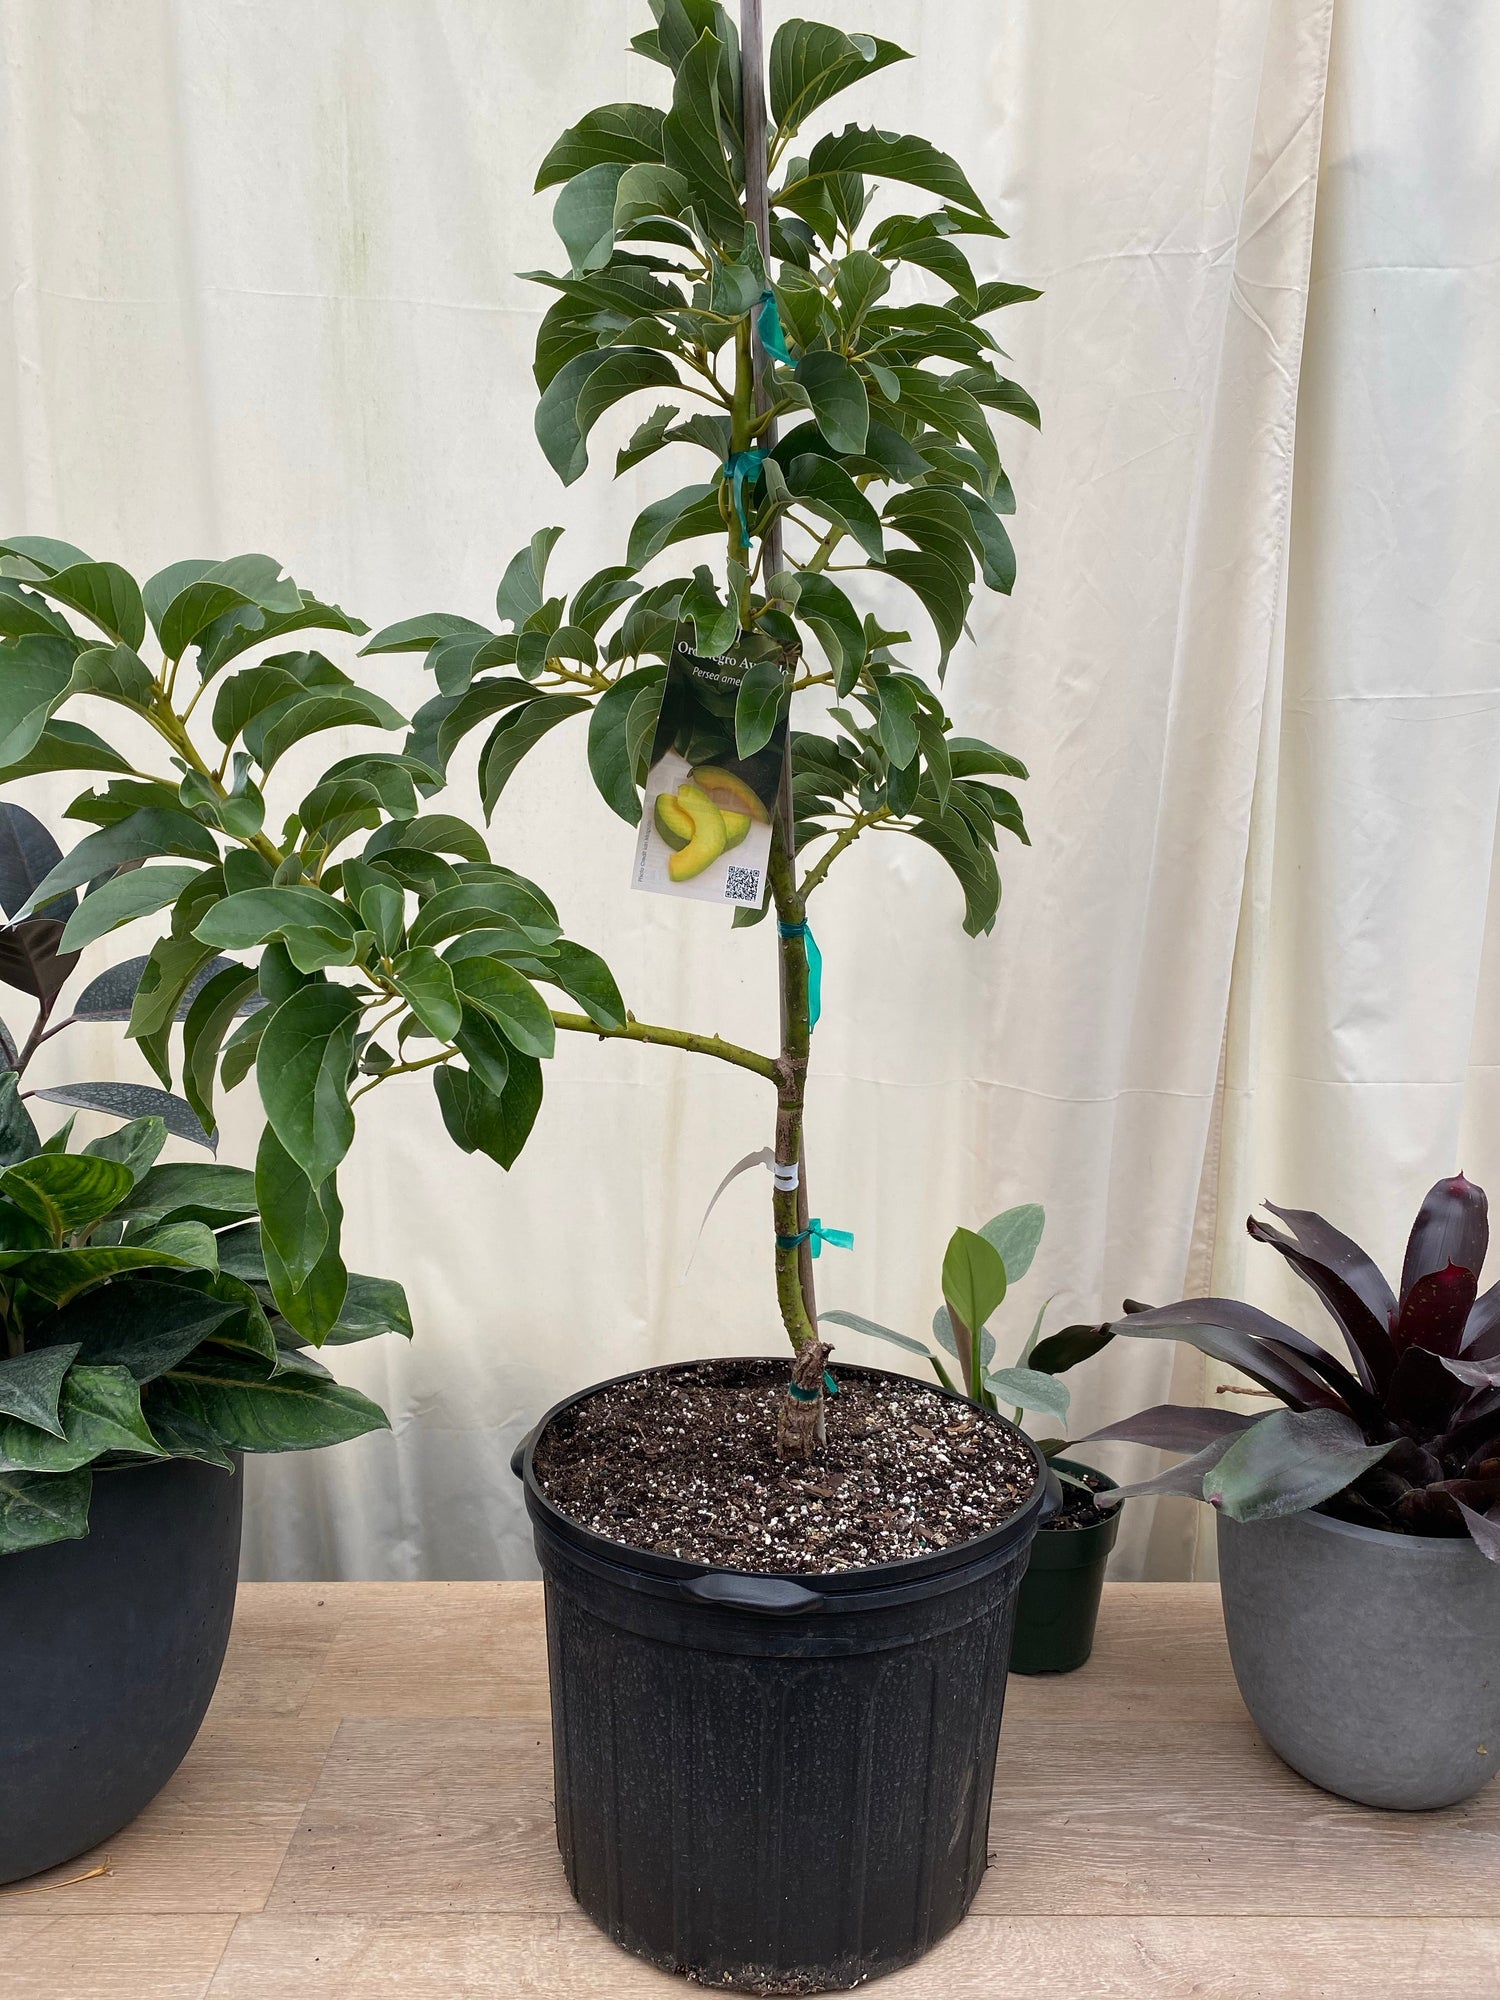 Monroe Avocado Fruit Tree, Cold Hardy Persea Americana